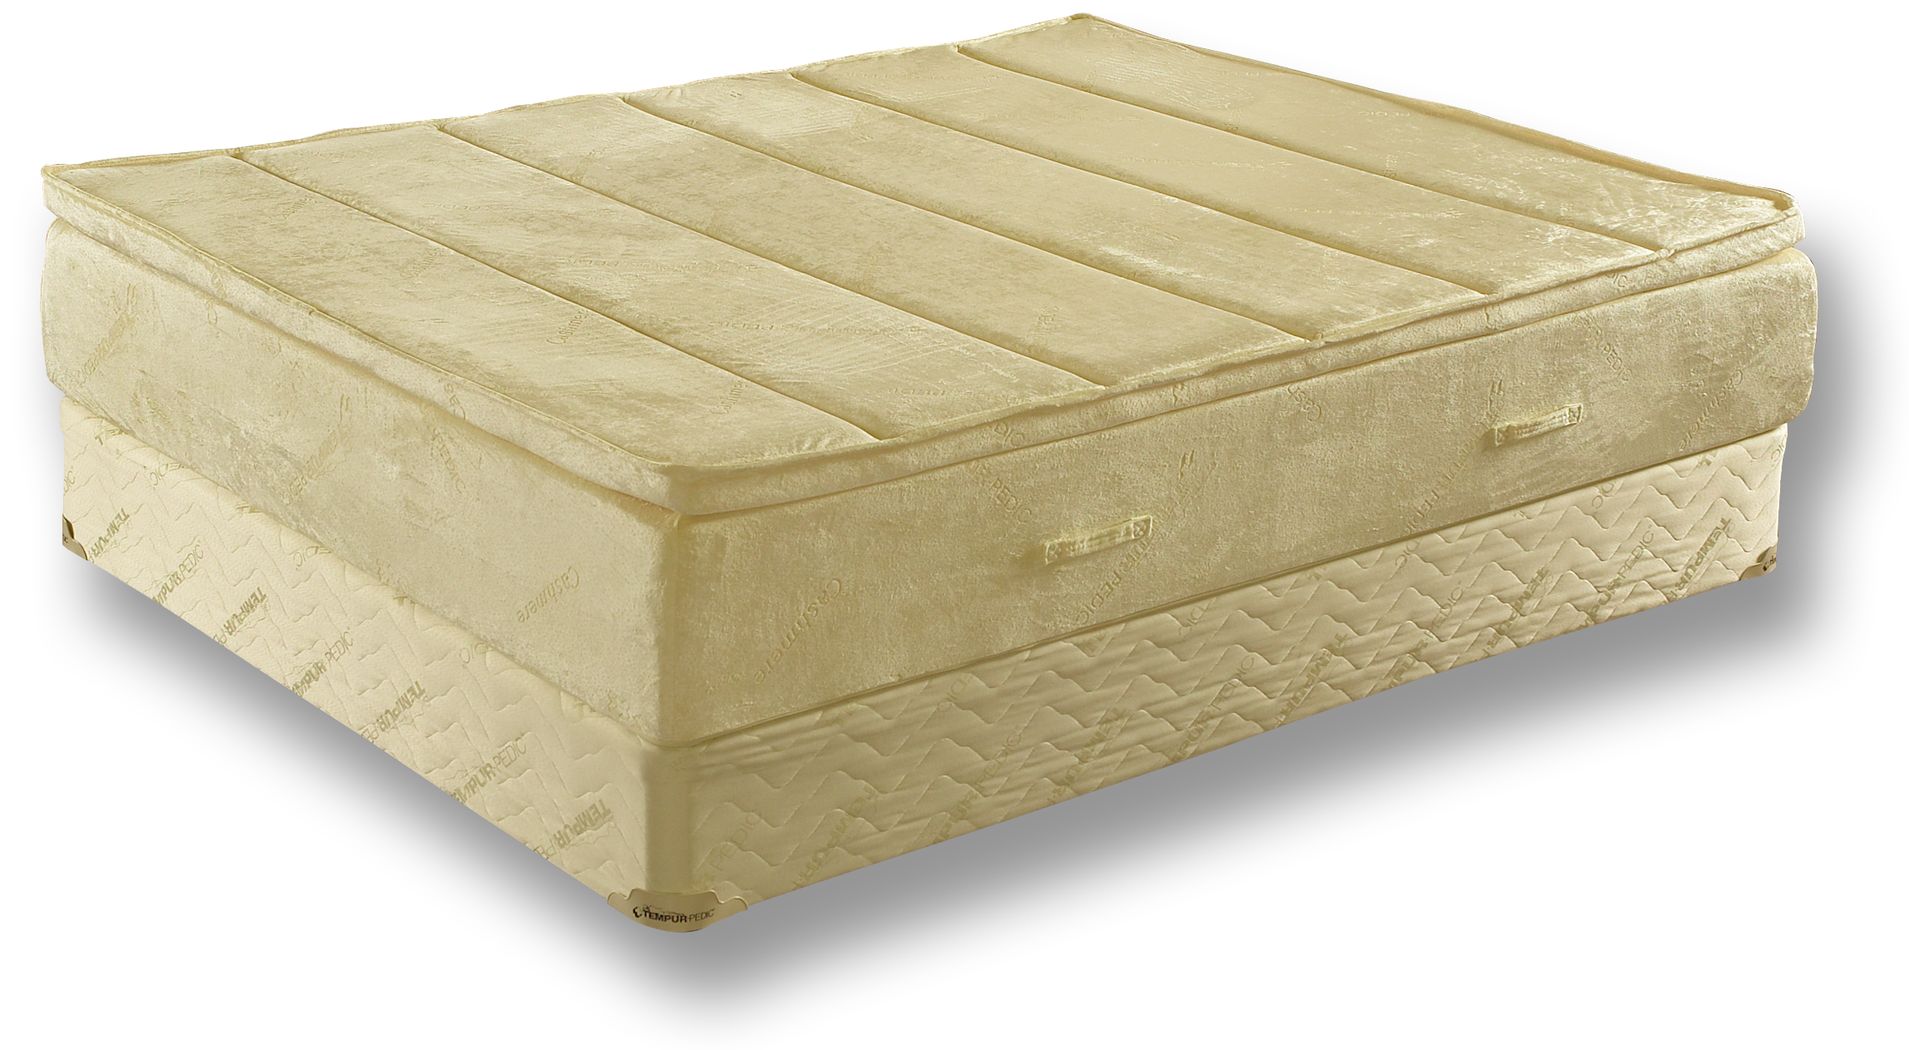 tempurpedic celebrity mattress cover